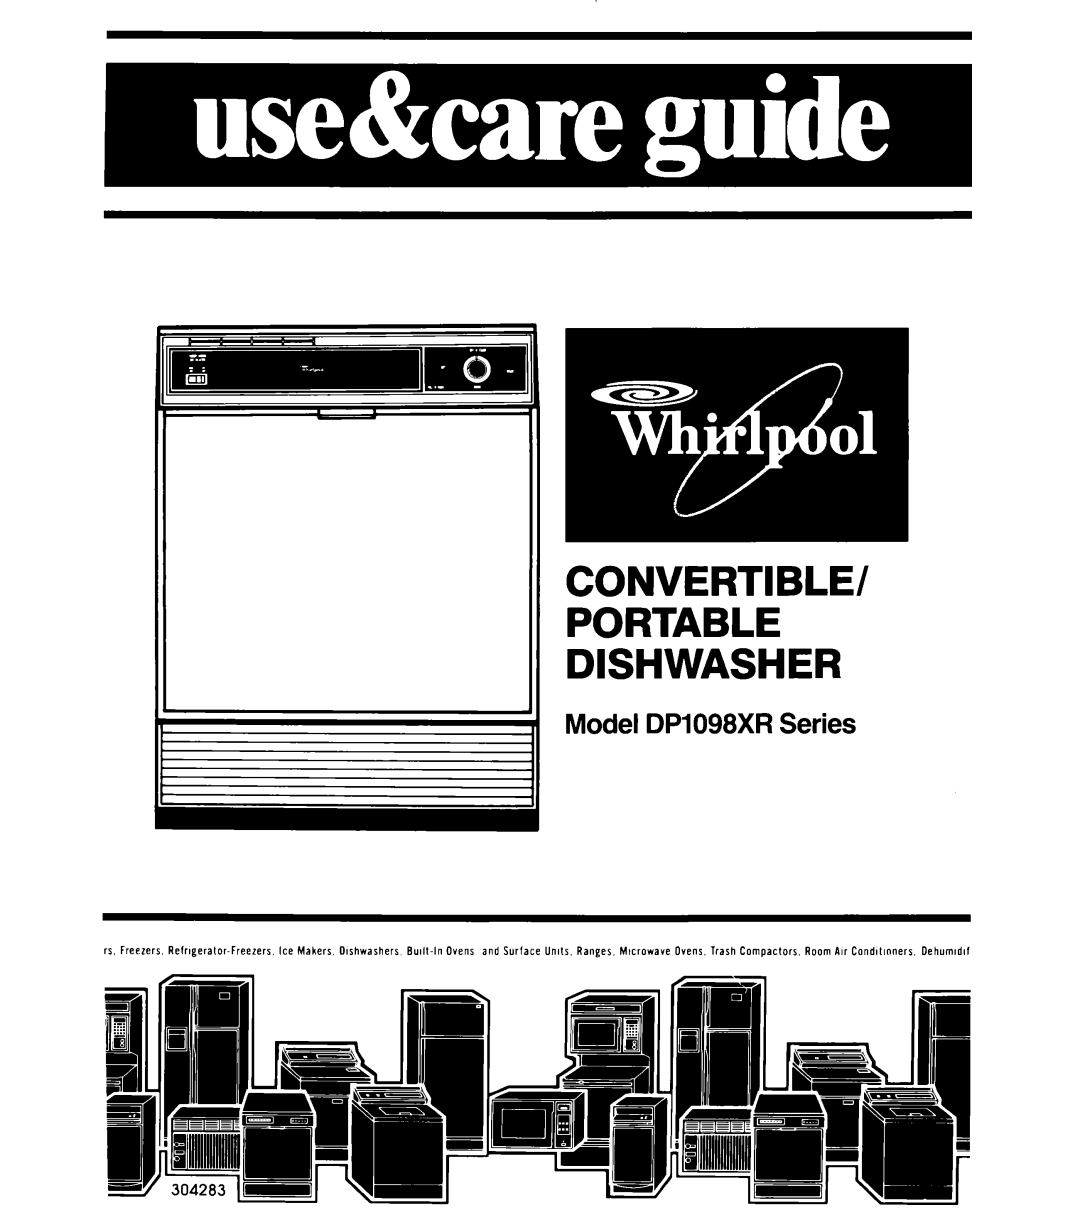 Whirlpool manual Portable, Dishwasher, Model DP1098XR Series, Convertible, Iiii 